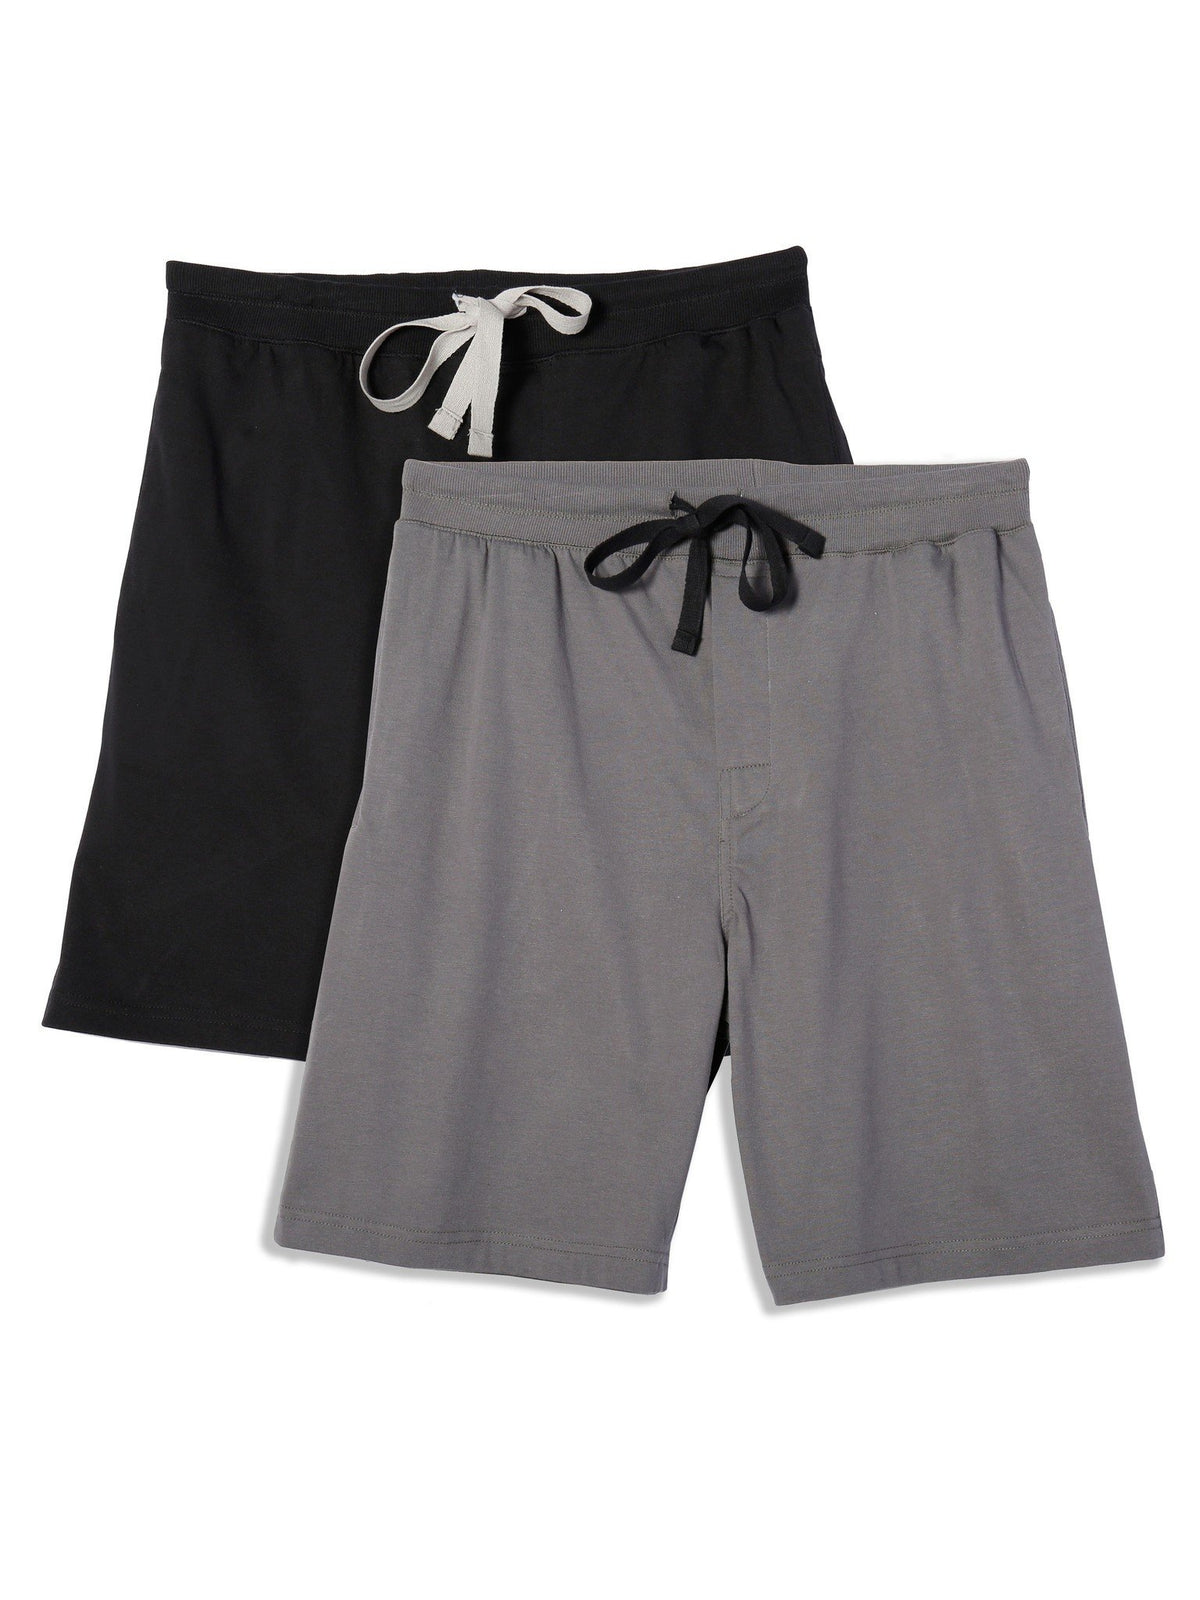 Men's 2-Pack Premium Knit Sleep/Lounge Shorts - Charcoal/Black